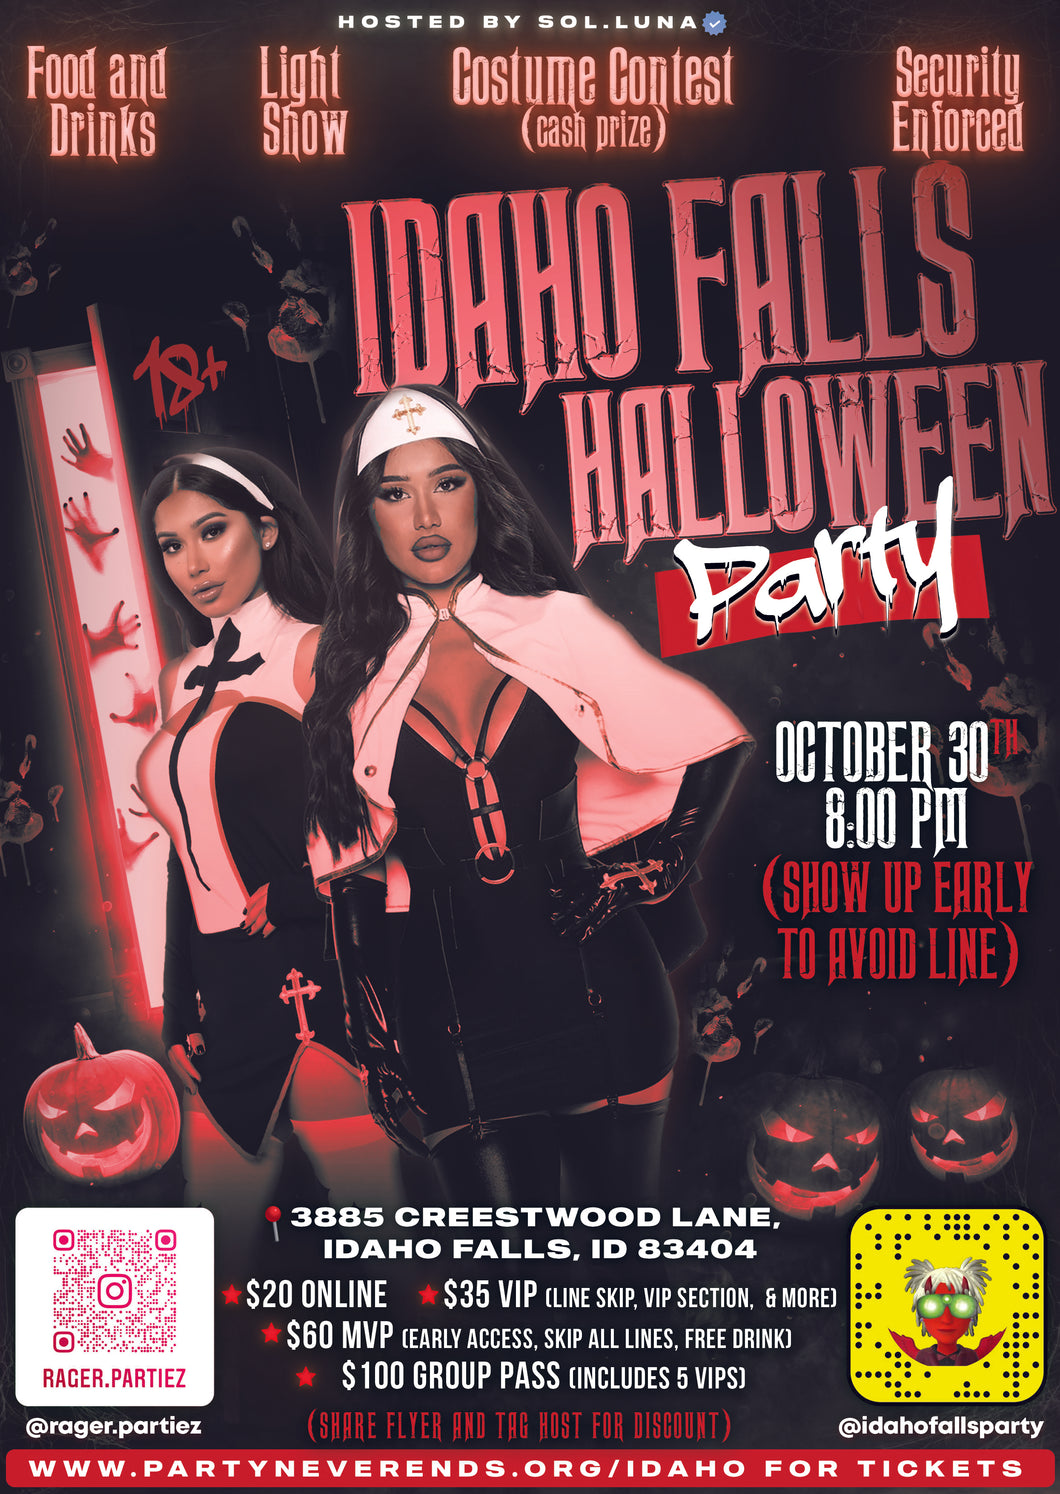 Idaho Falls Halloween Party Group Pass